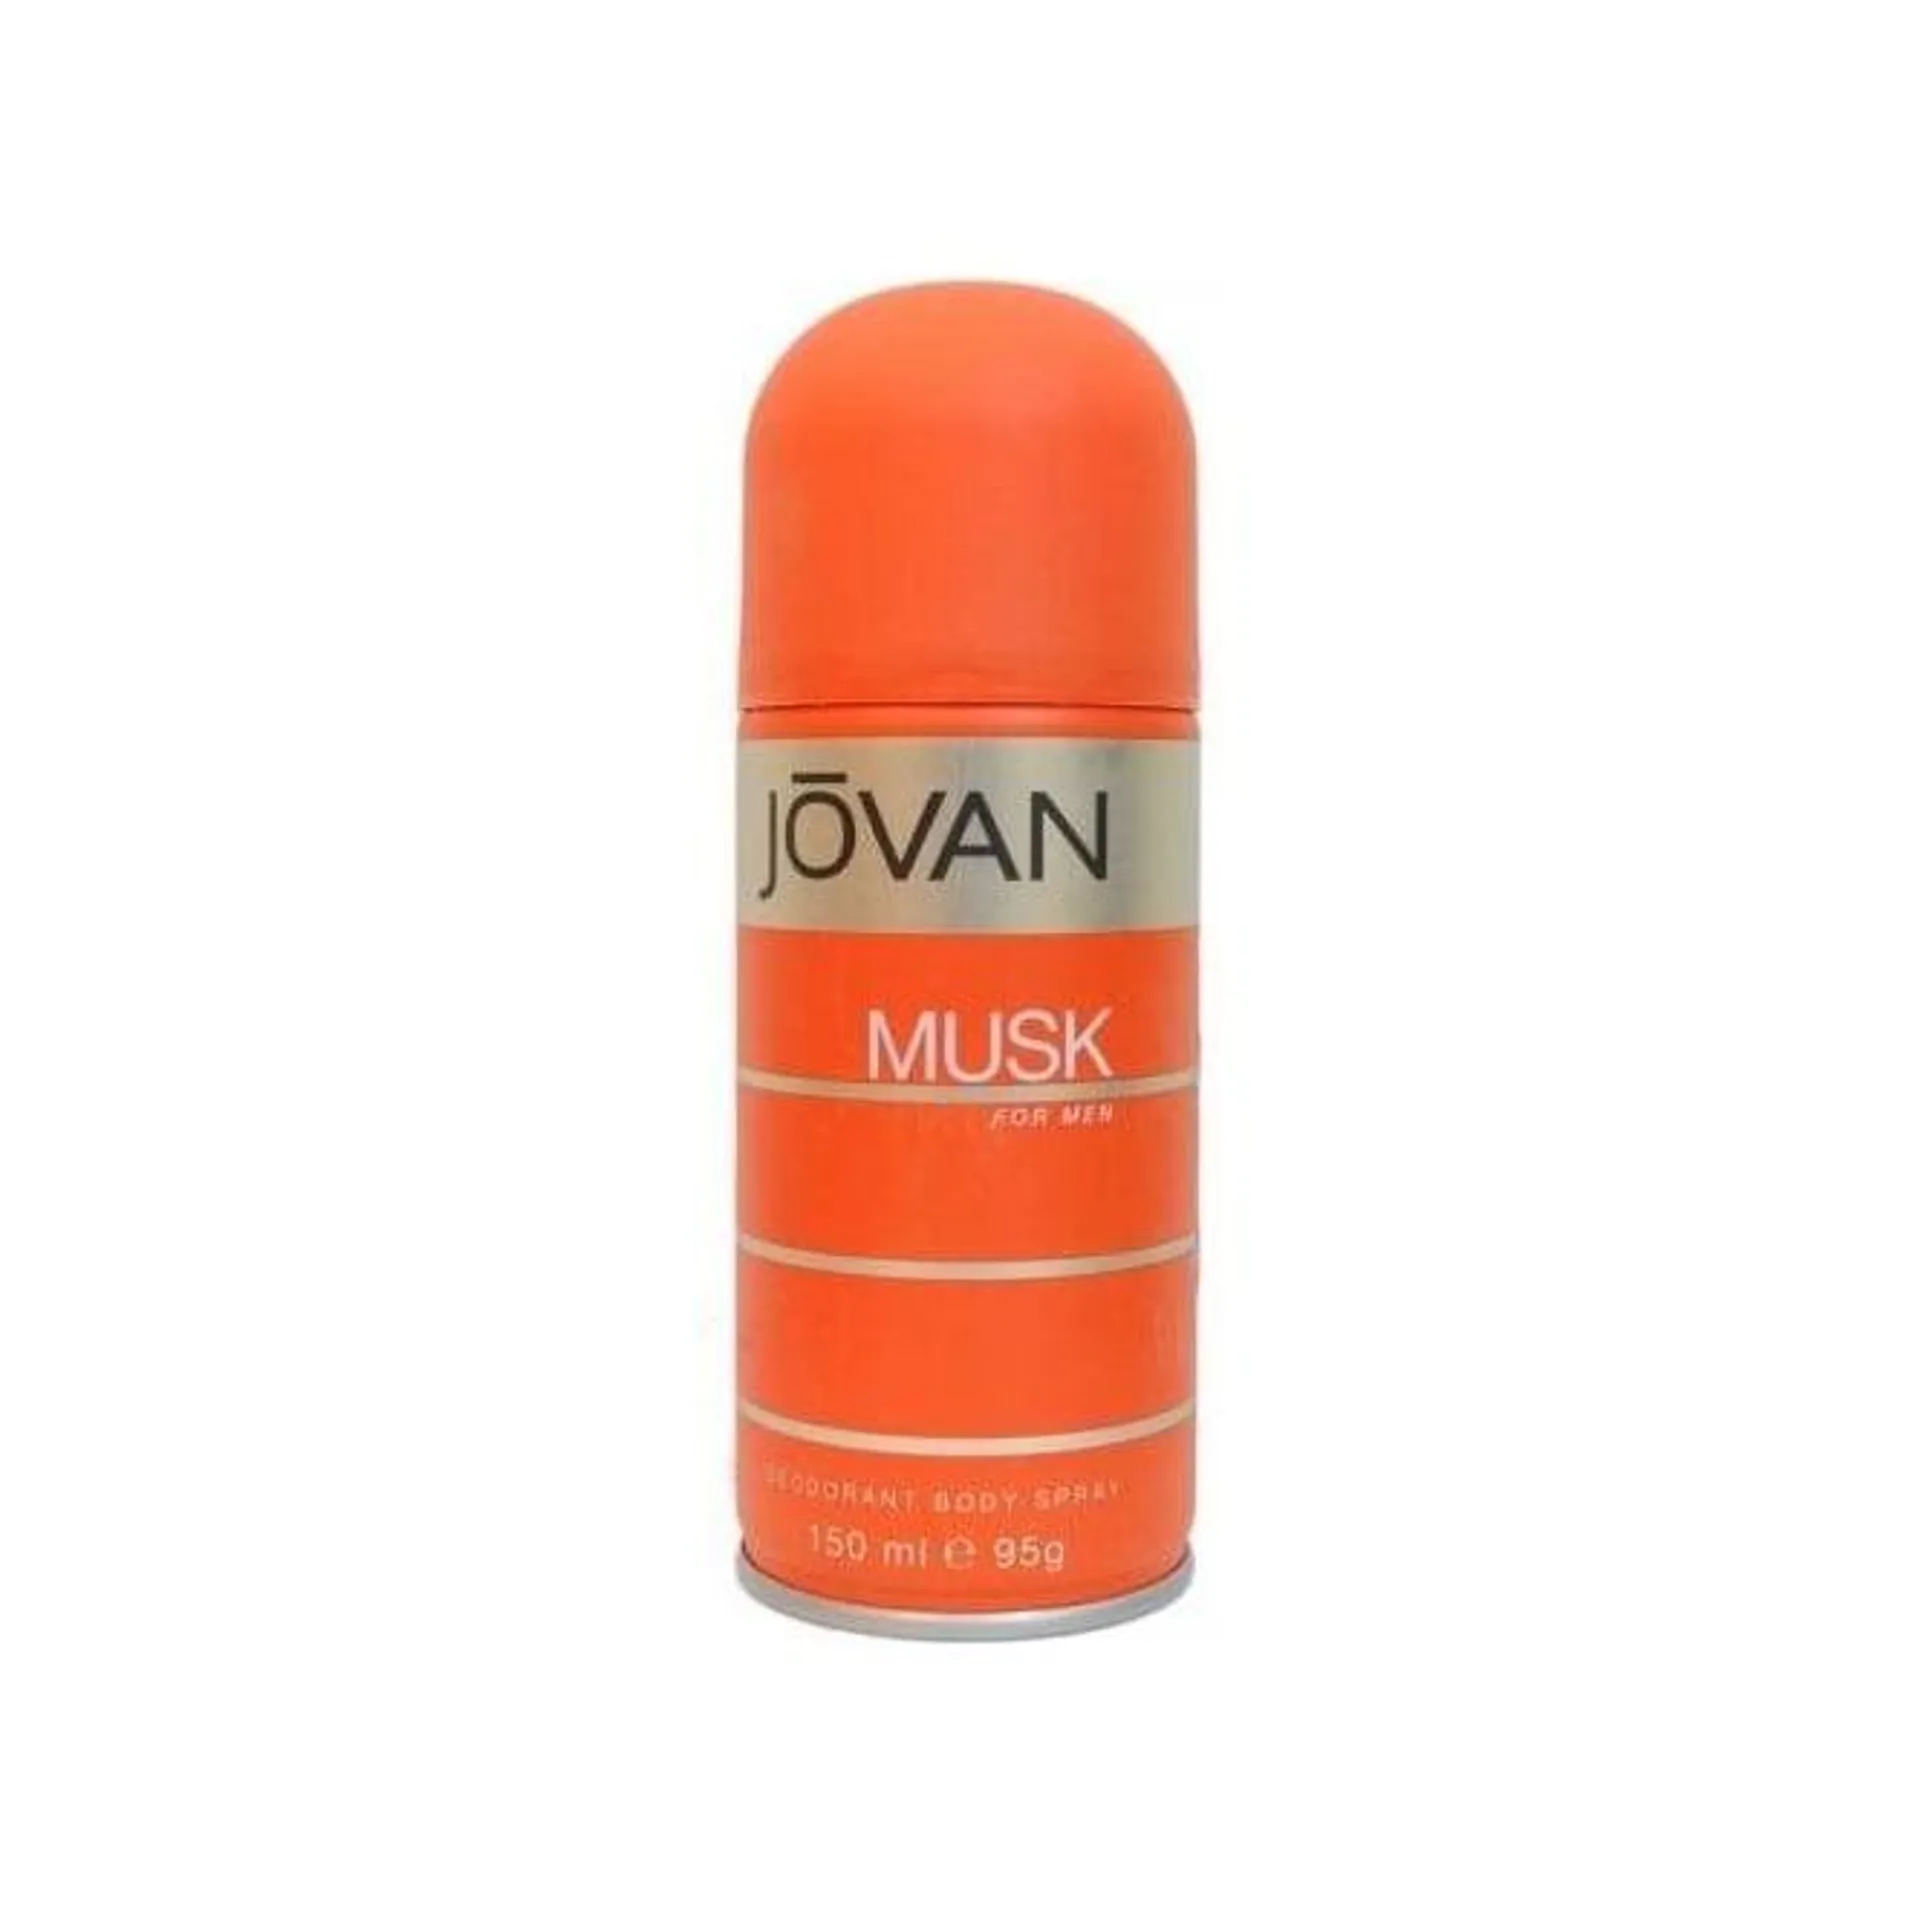 Jovan Musk For Men Body Spray 150ml Spray Spray